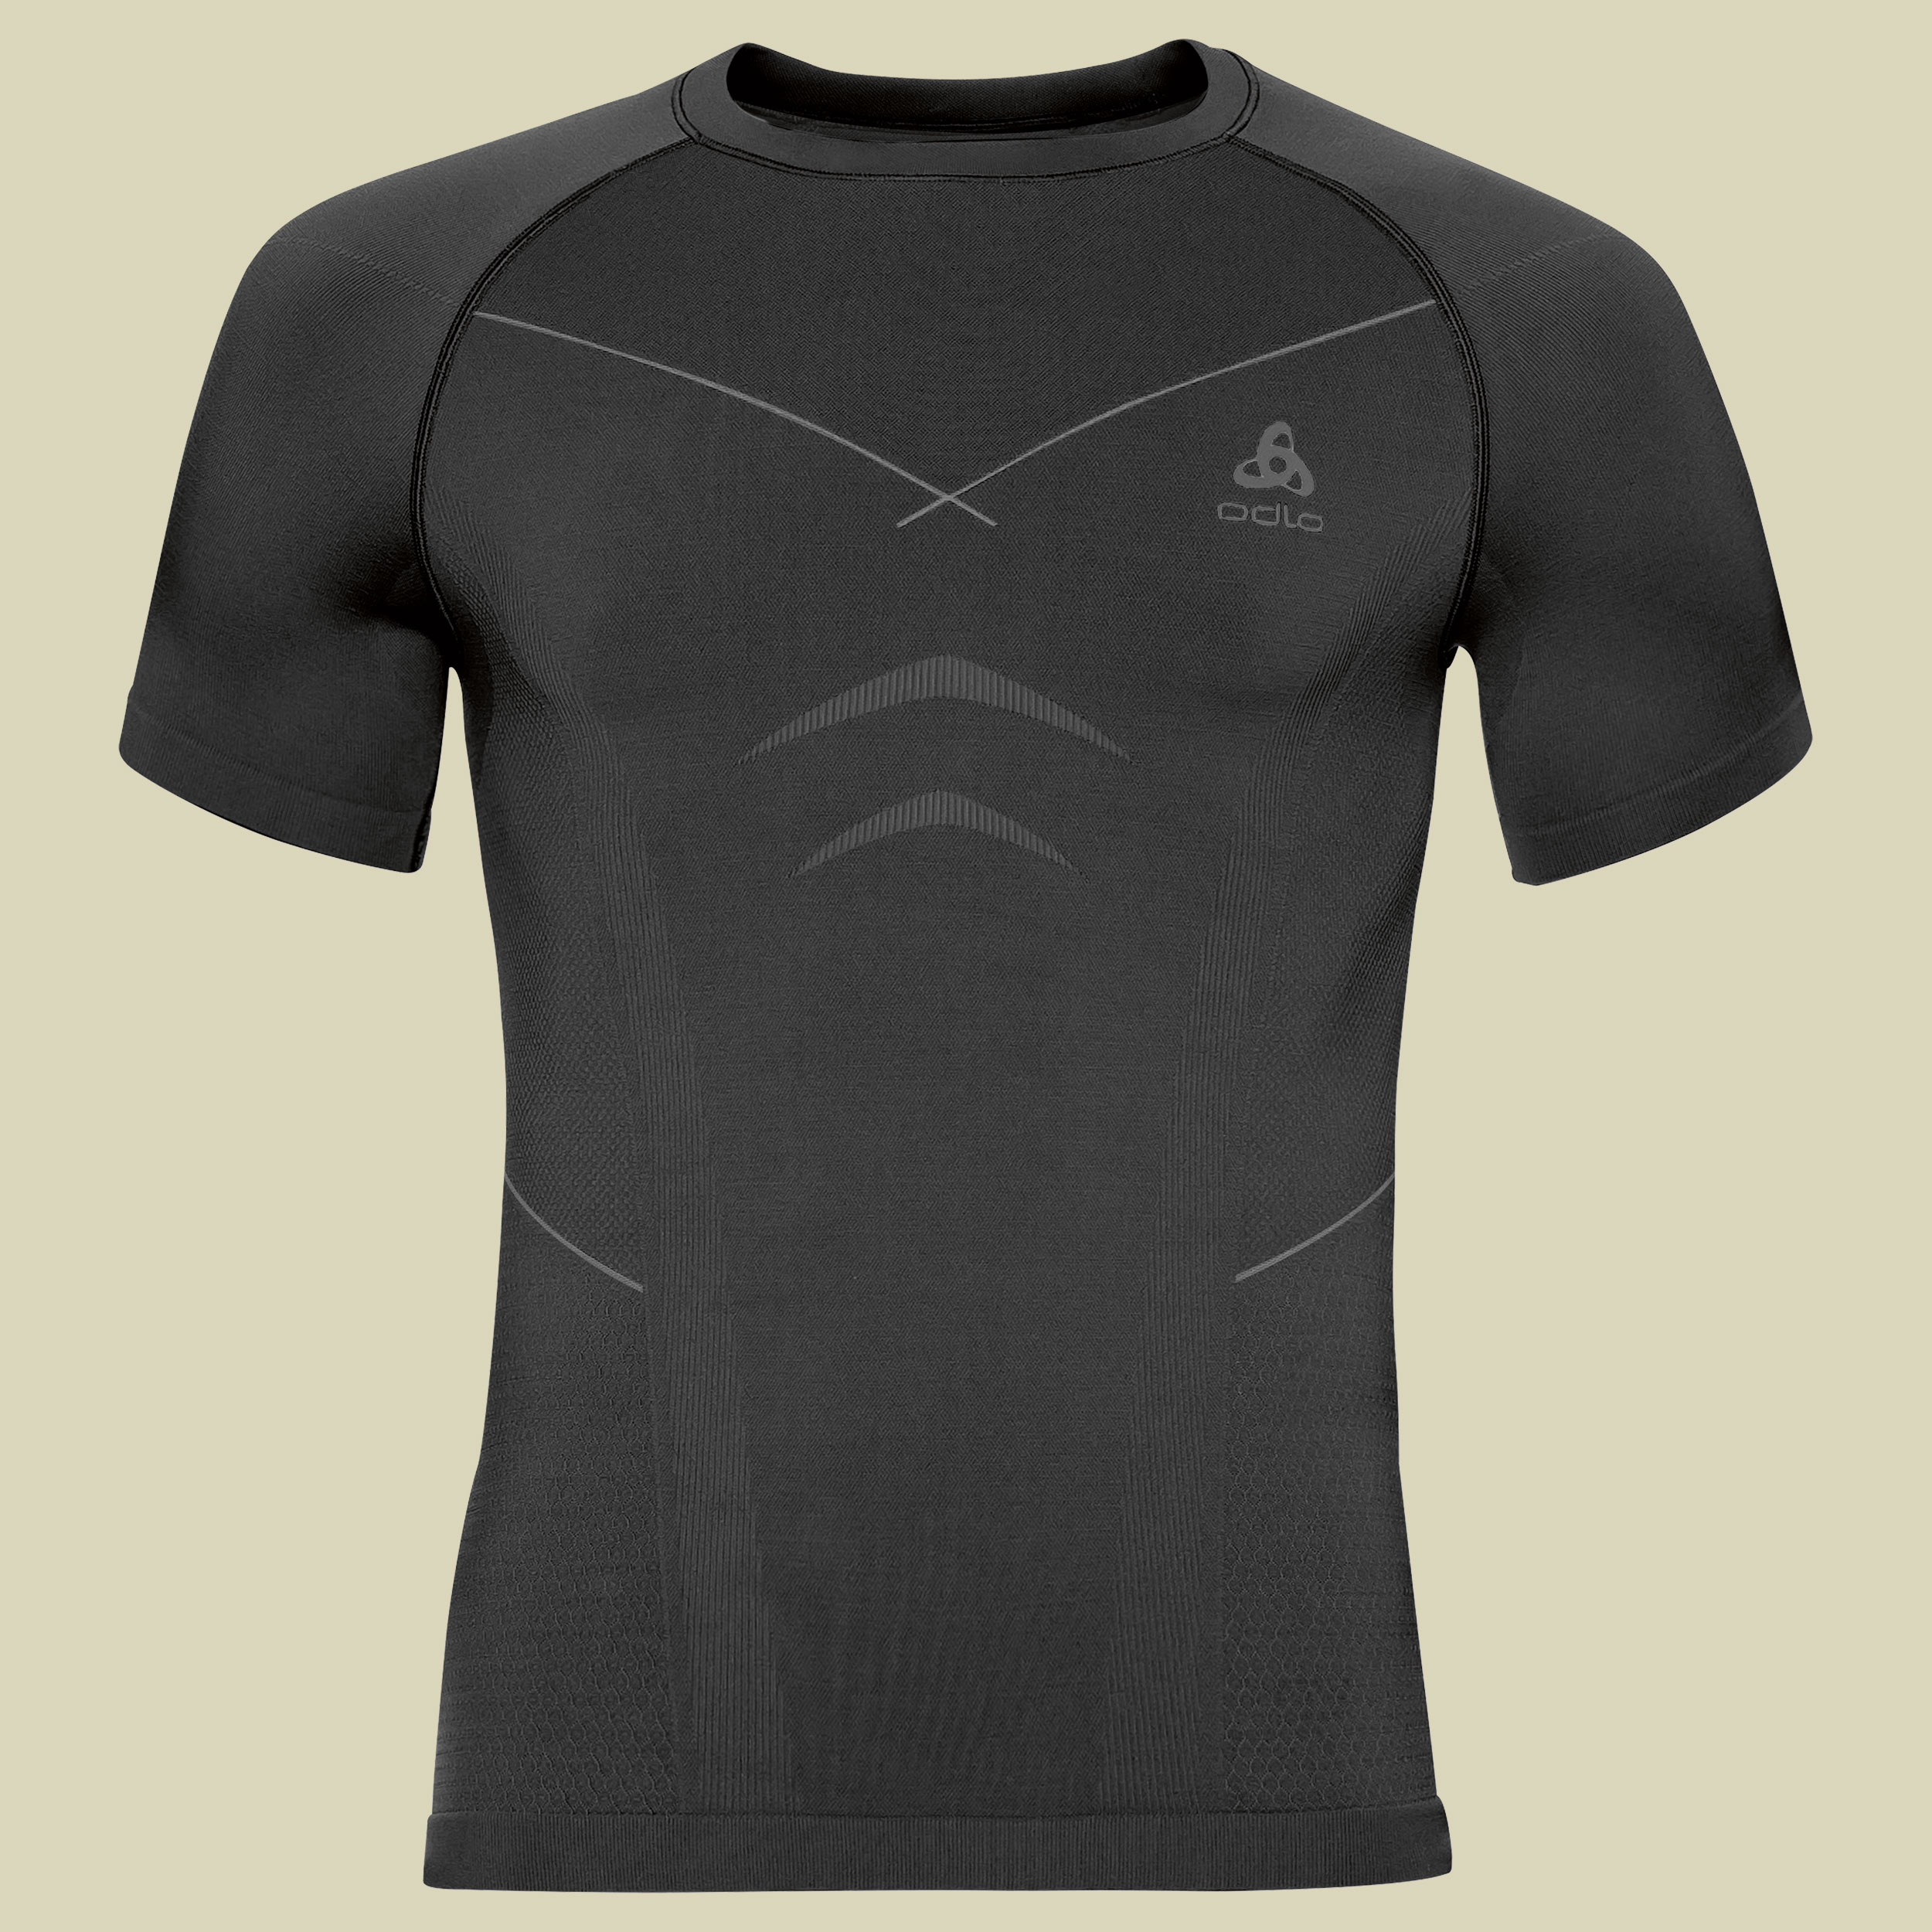 Evolution Warm Shirt s/s crew neck Men 184142 Größe S Farbe black-odlo graphite grey